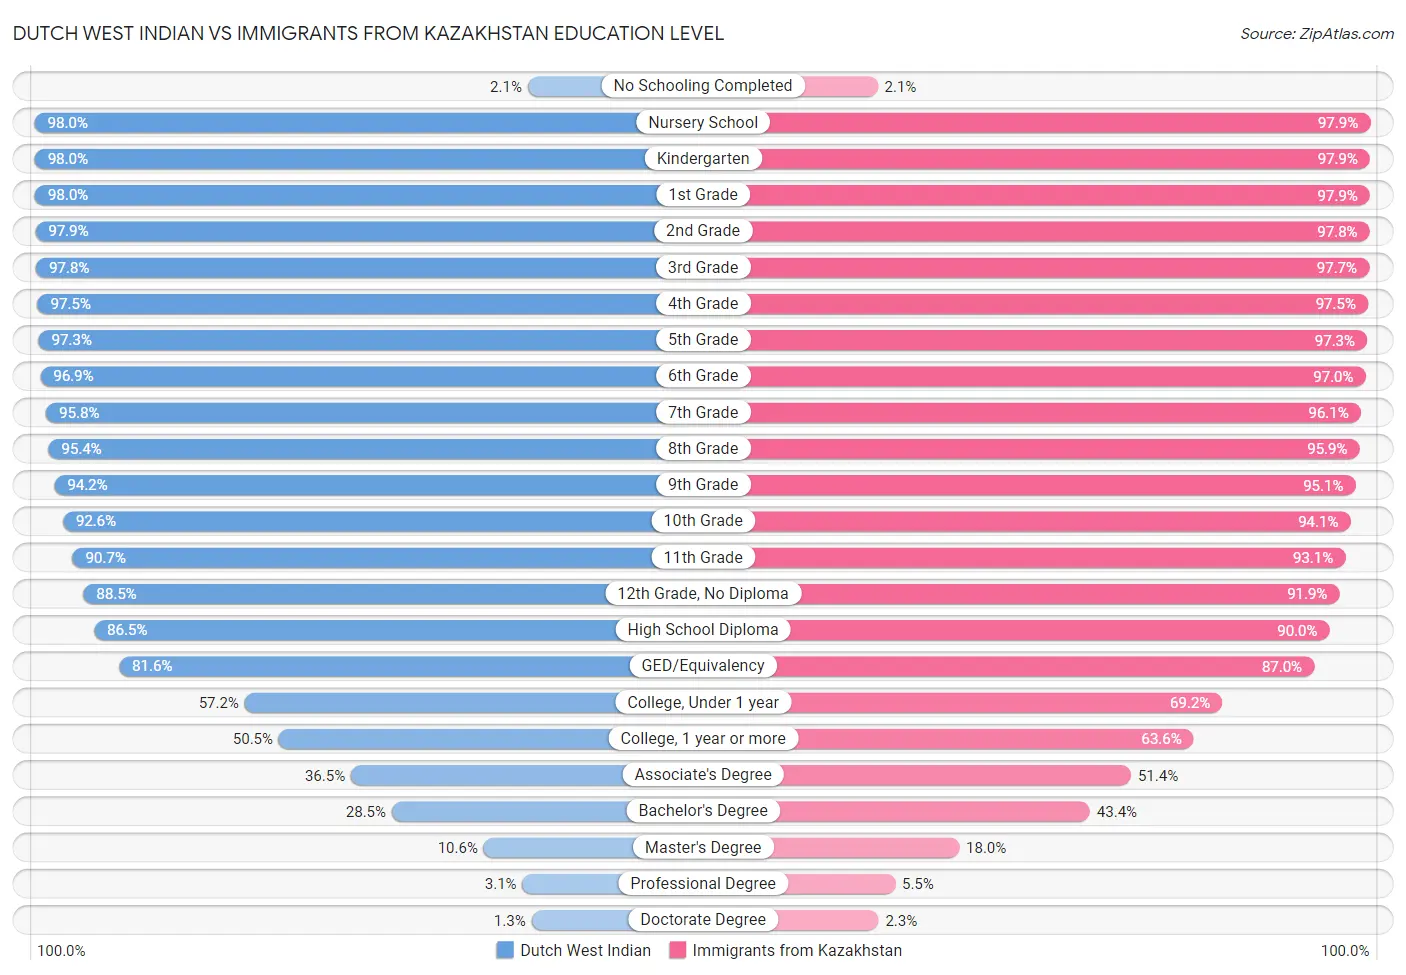 Dutch West Indian vs Immigrants from Kazakhstan Education Level